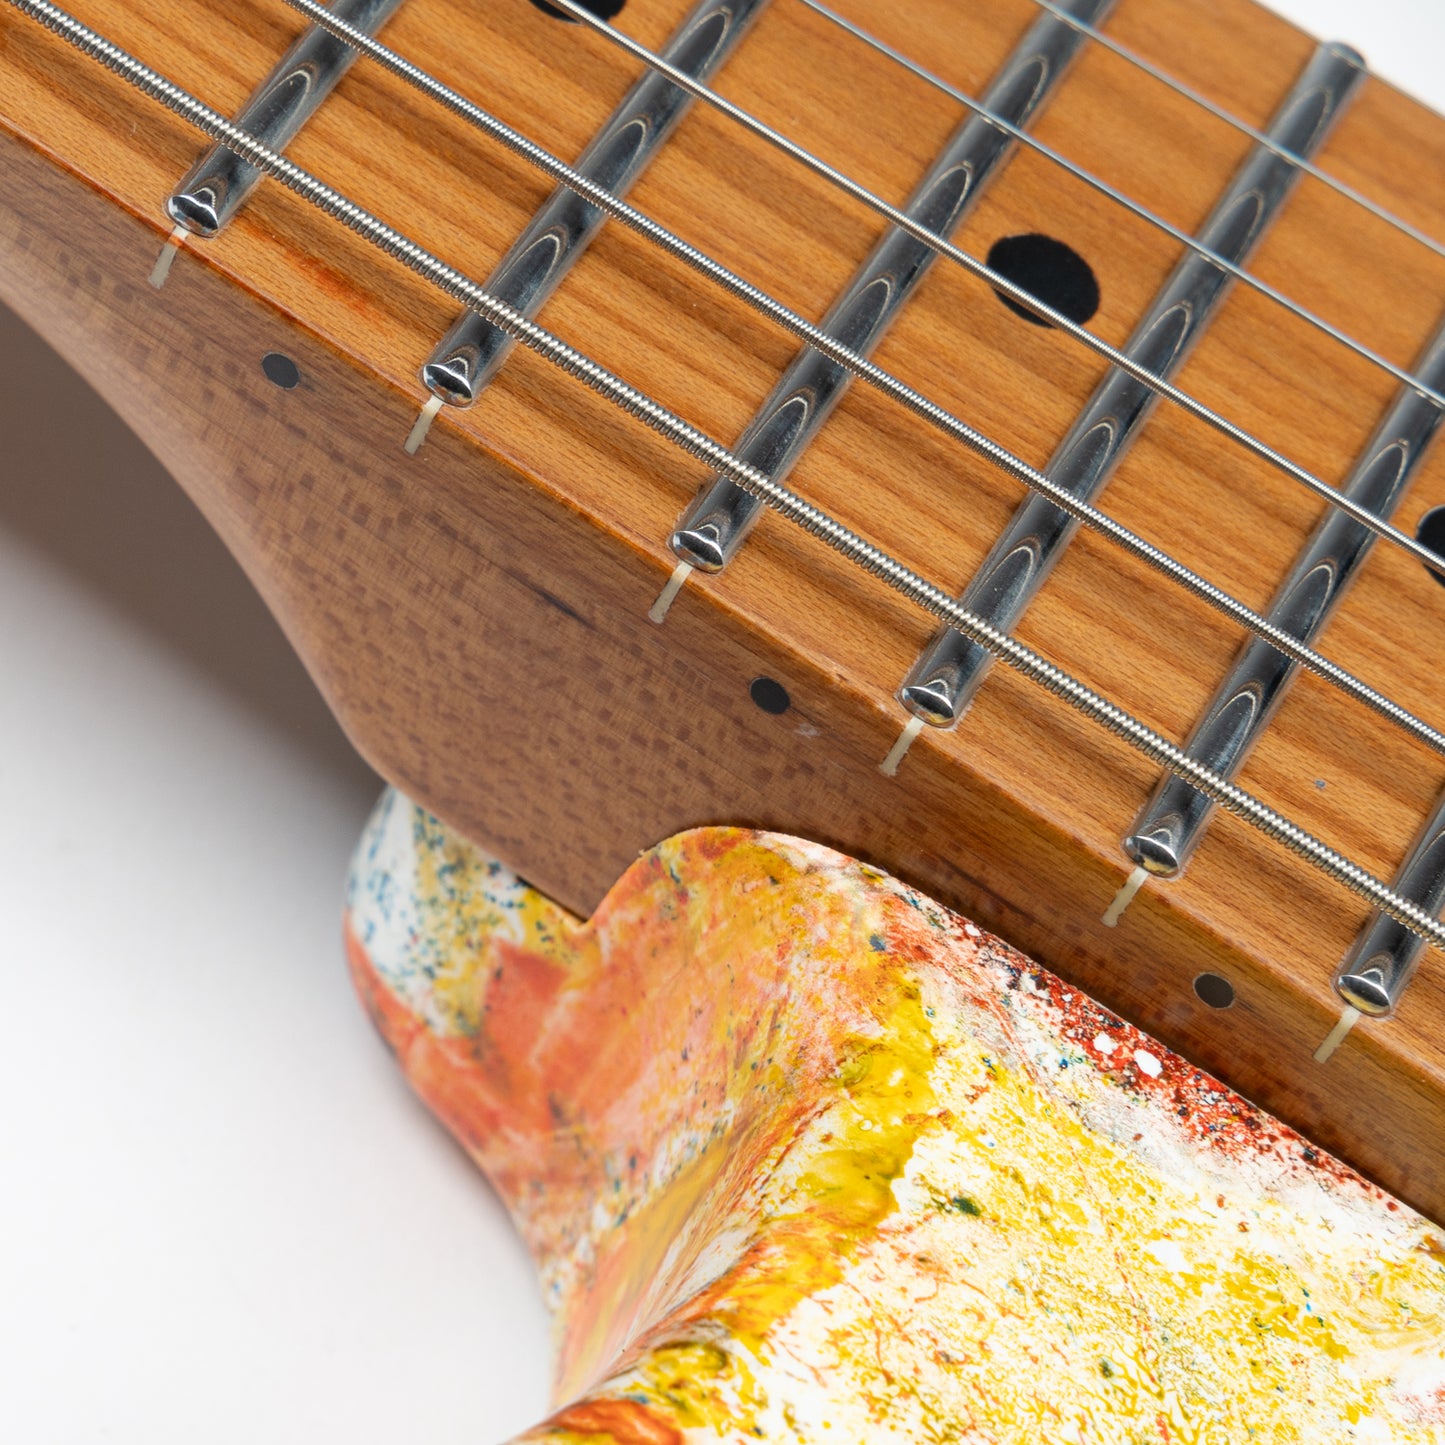 EART Guitars, DMX-10HLA-PRO, Satin Handmade Lacquer Art Electric Guitar